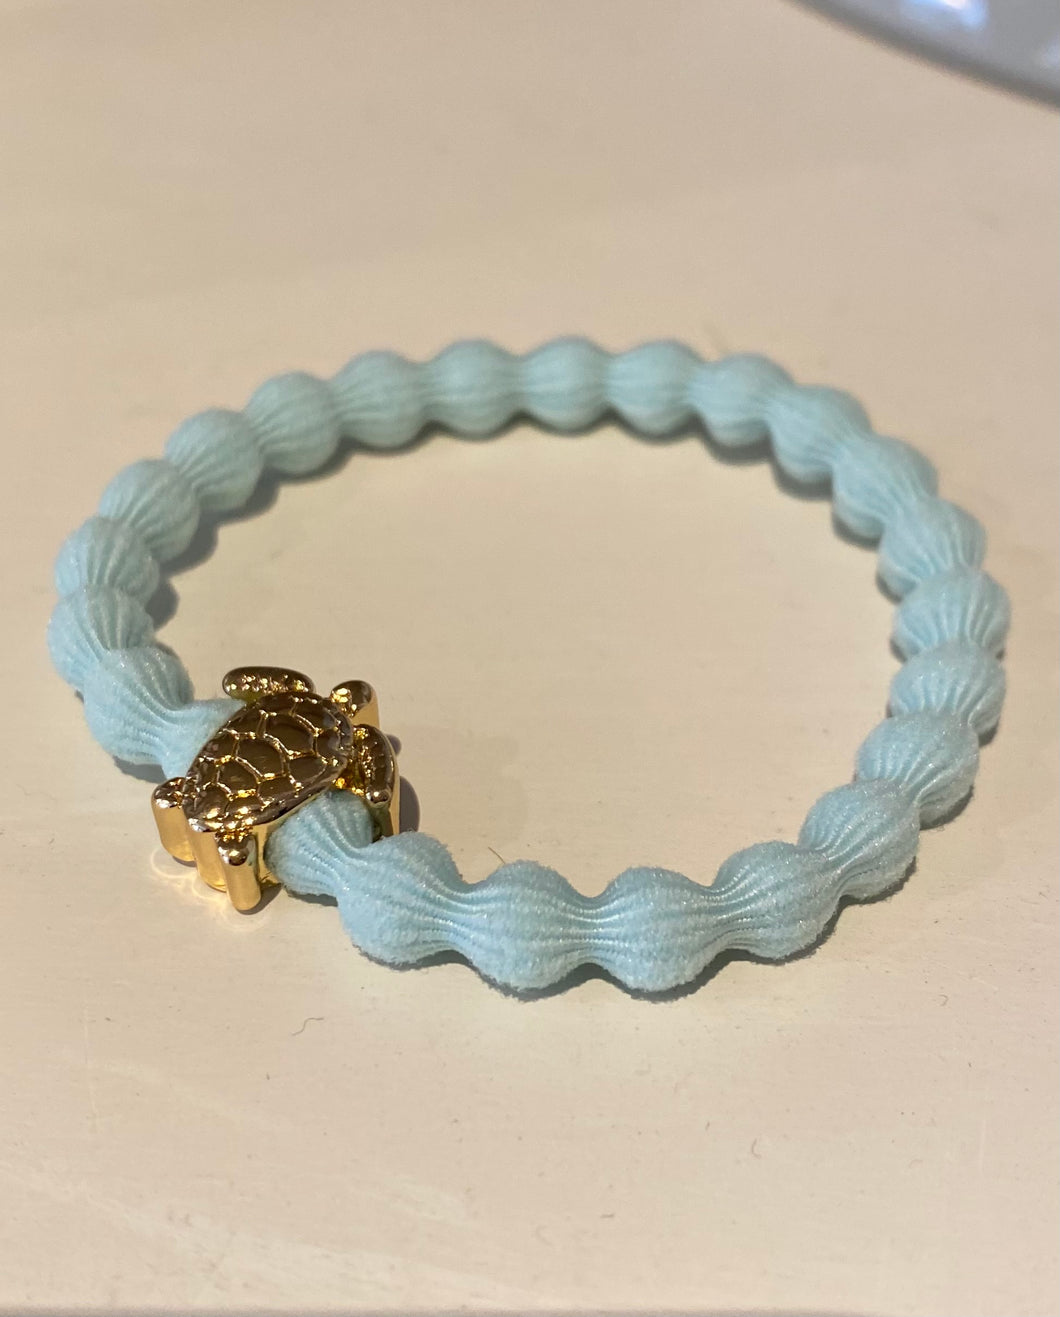 Aqua bracelet with a silver/gold turtle 